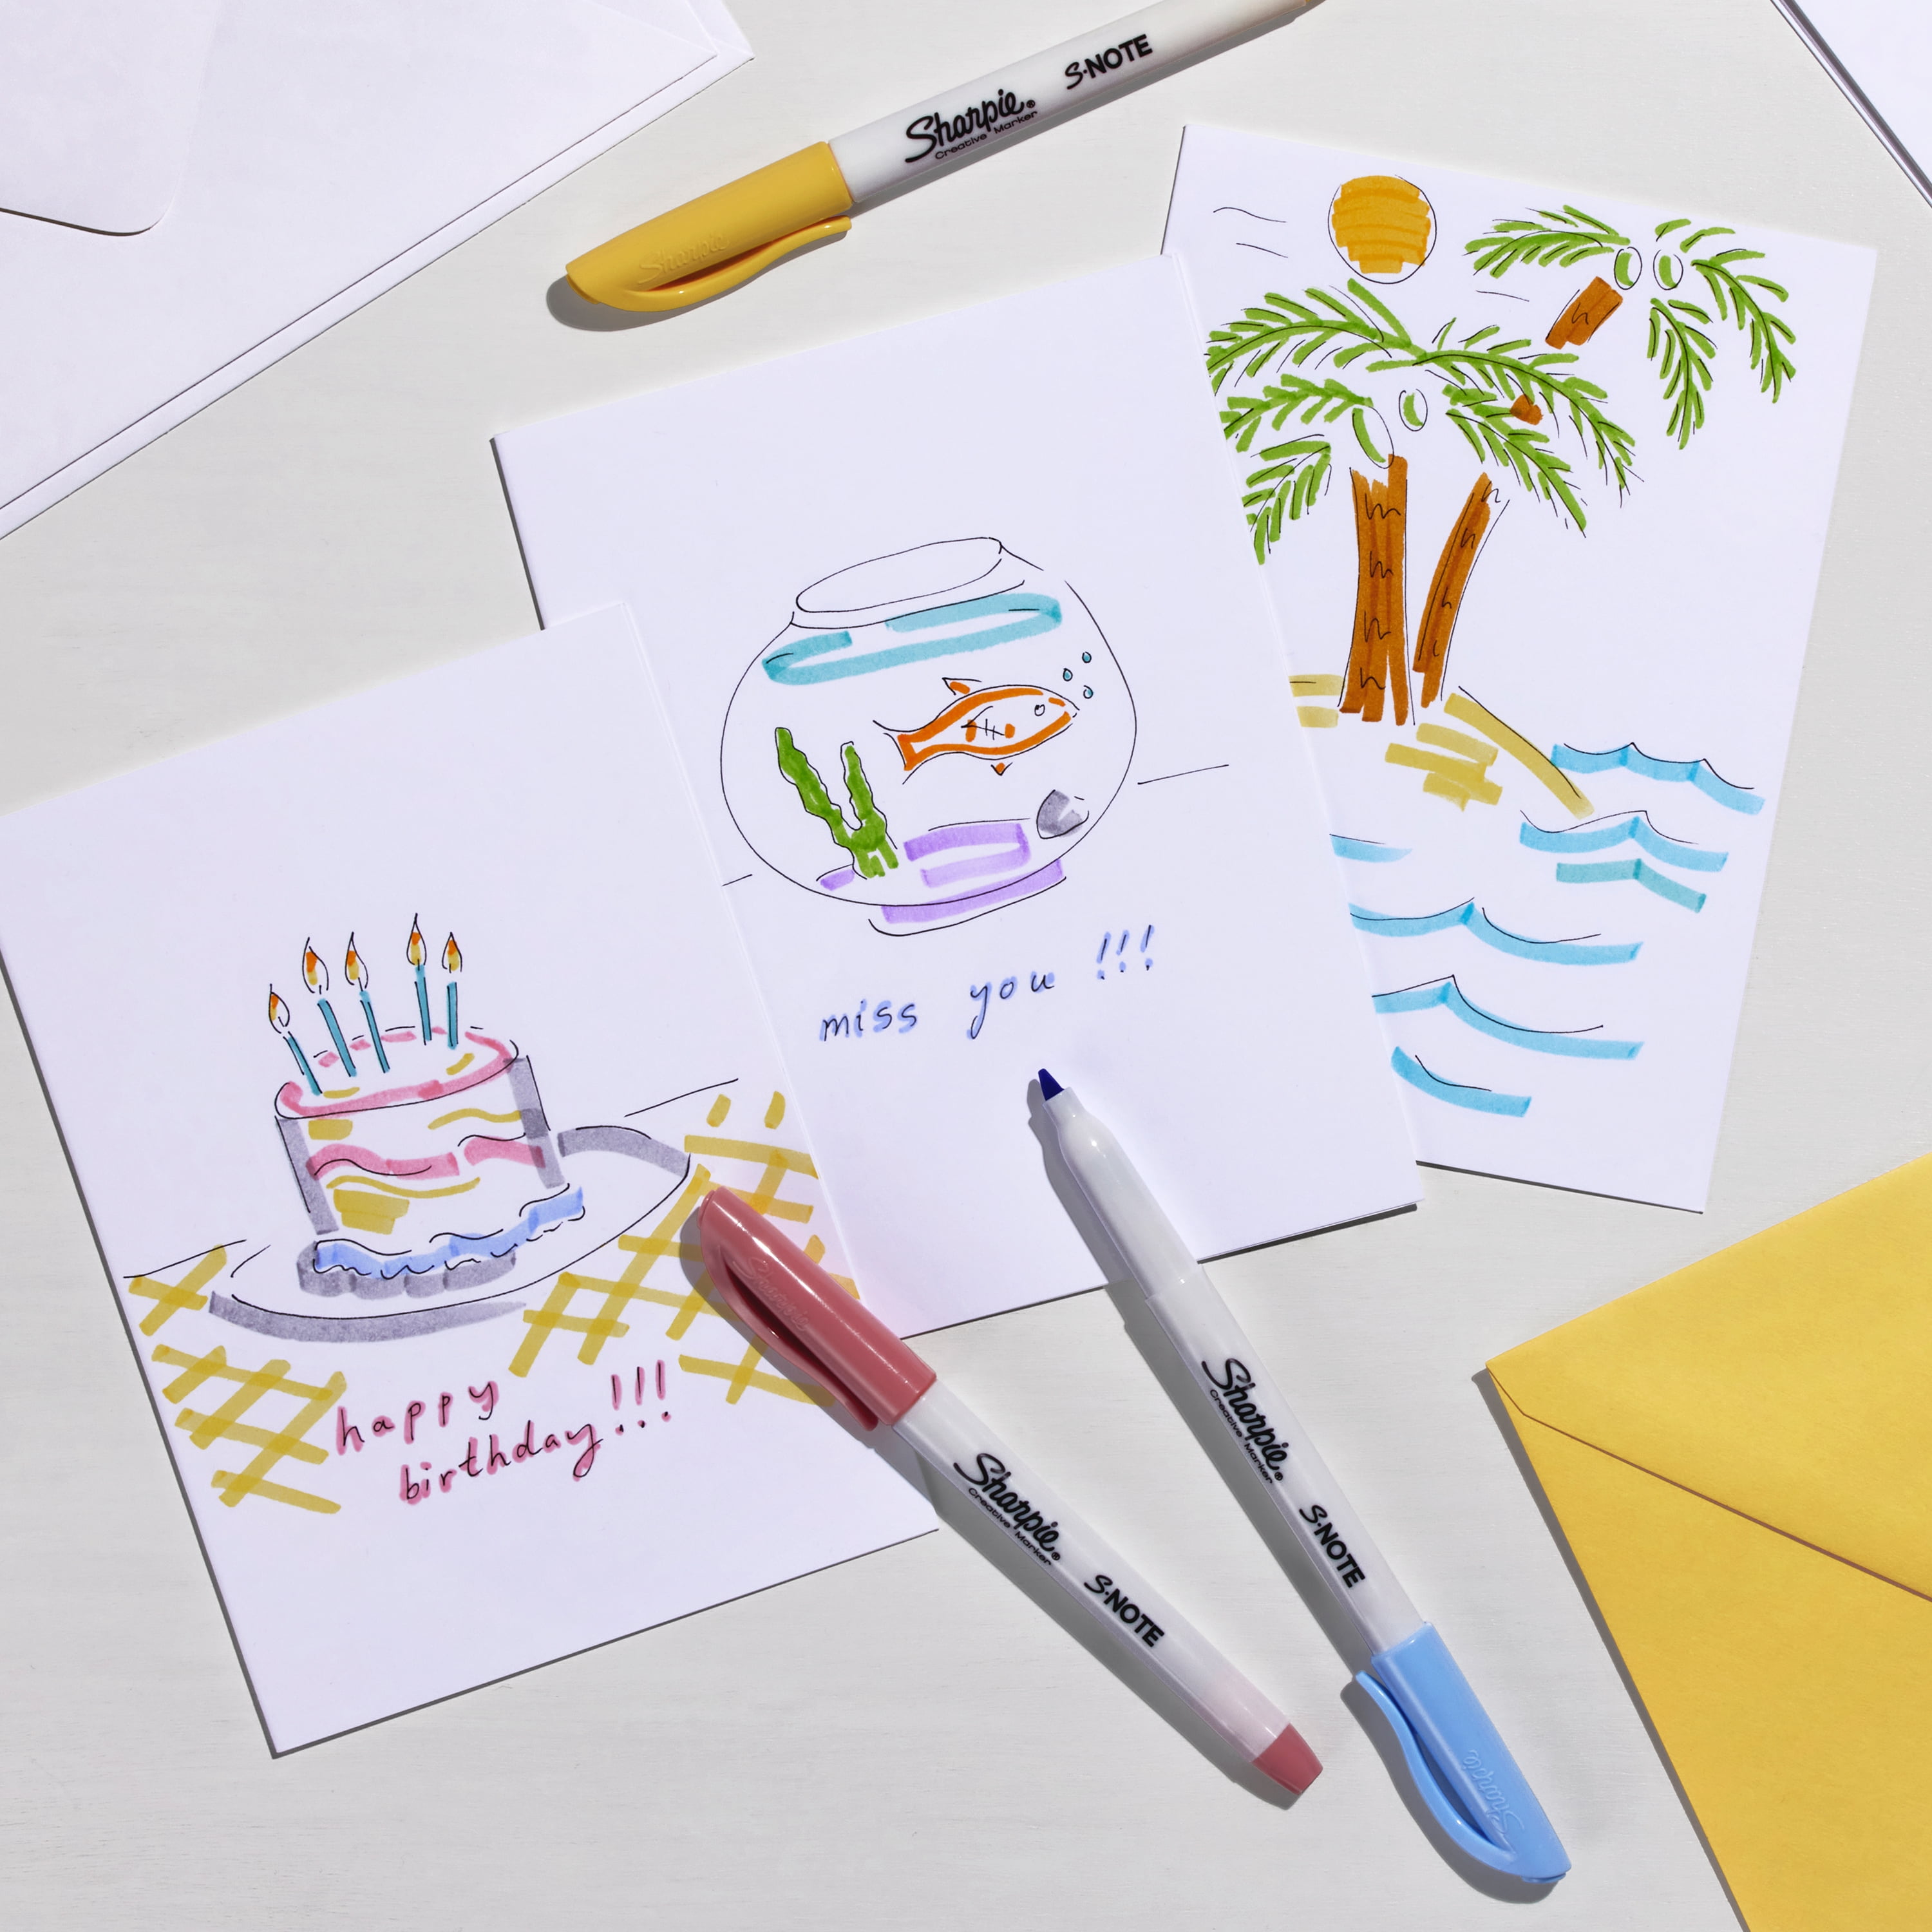 Sharpie S-Note Creative Markers - Set of 36, BLICK Art Materials